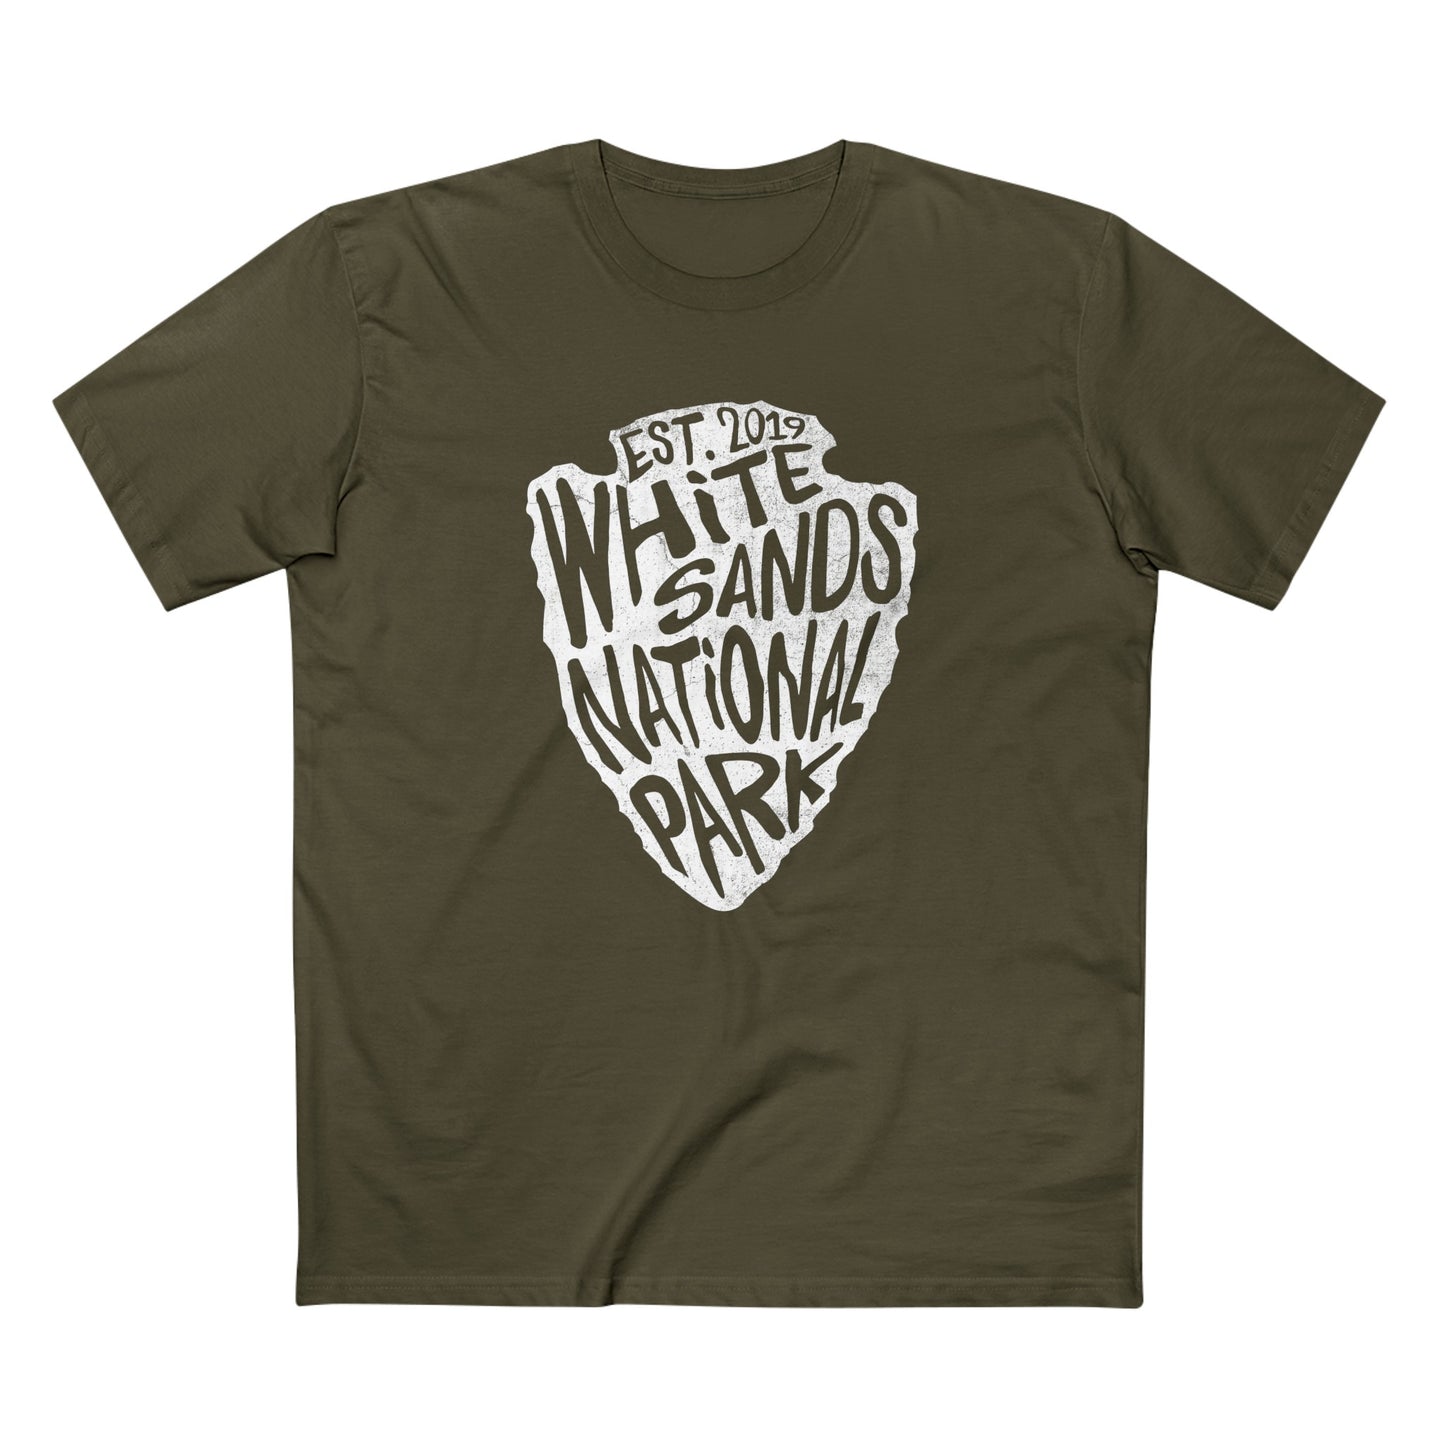 White Sands National Park T-Shirt - Arrowhead Design